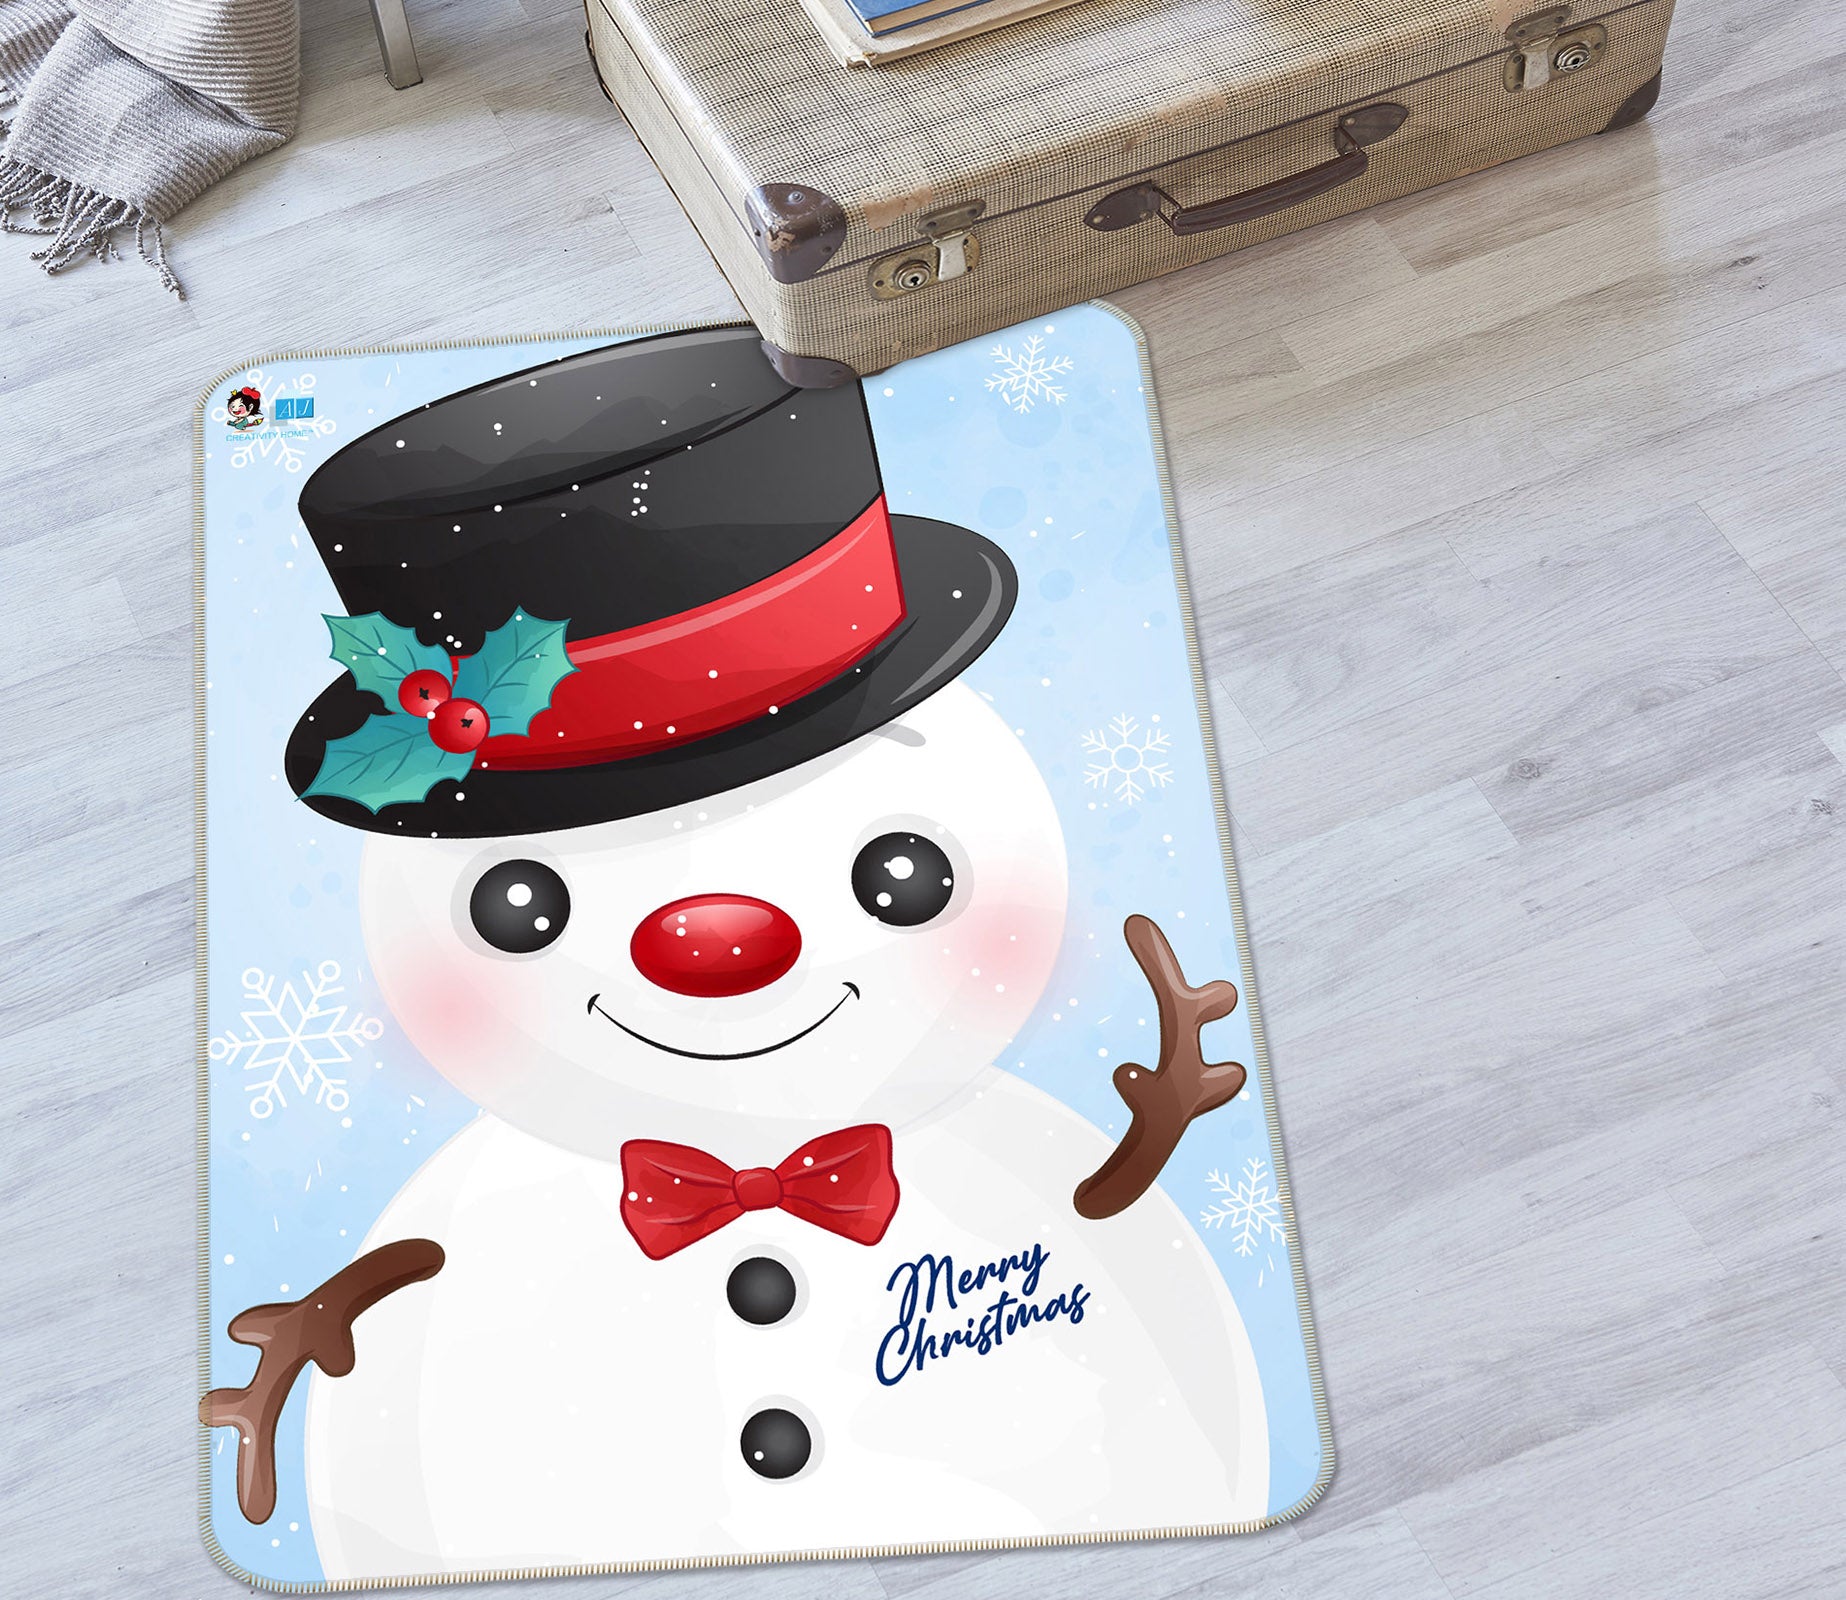 3D Cute Snowman Top Hat 57010 Christmas Non Slip Rug Mat Xmas